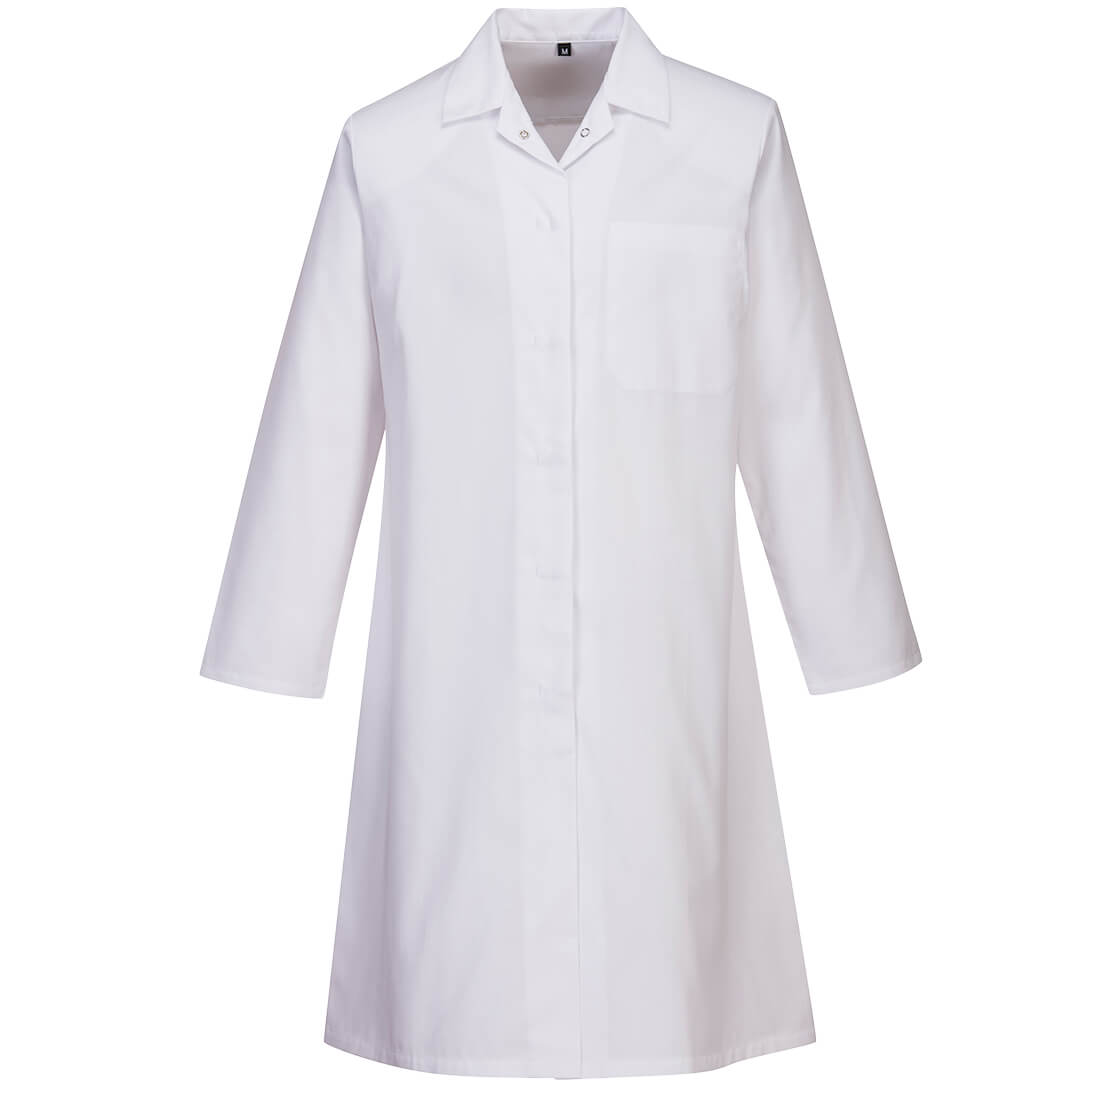 Portwest 2205 - White Ladies Food Industry Coat, One Pocket sz XSmall Regular Apron jacket